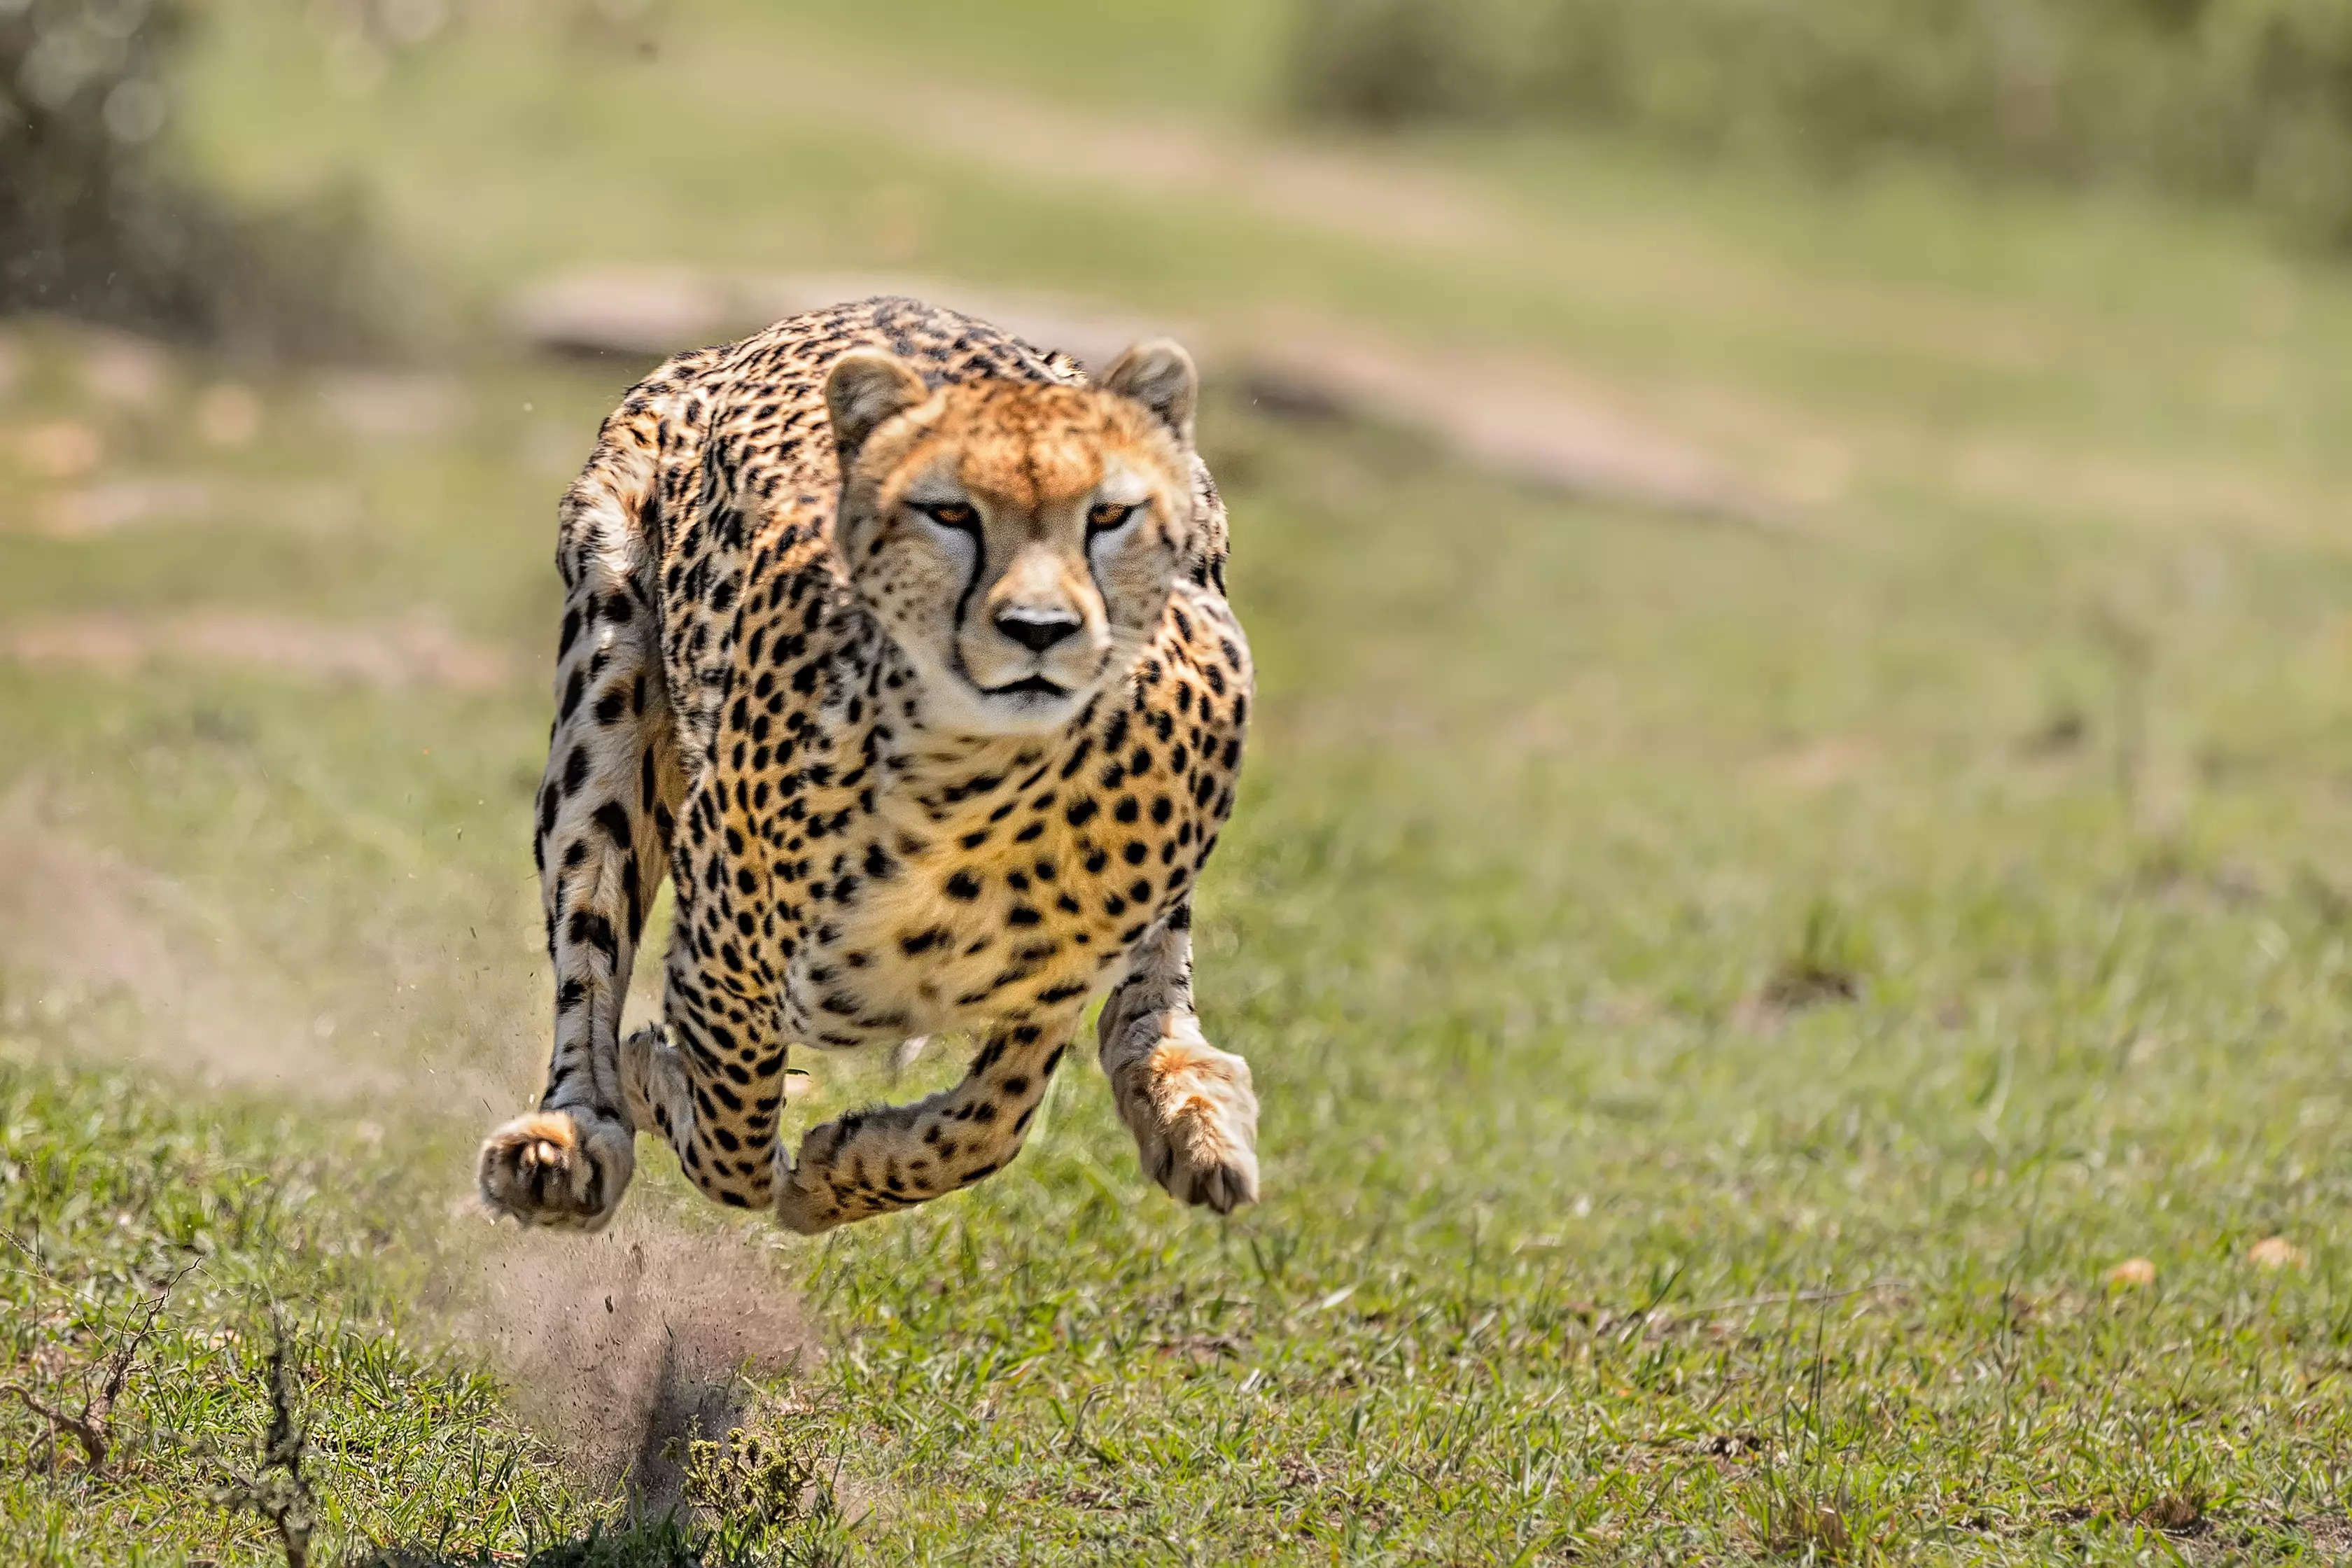 Welcoming back the Cheetah, restoring lost heritage